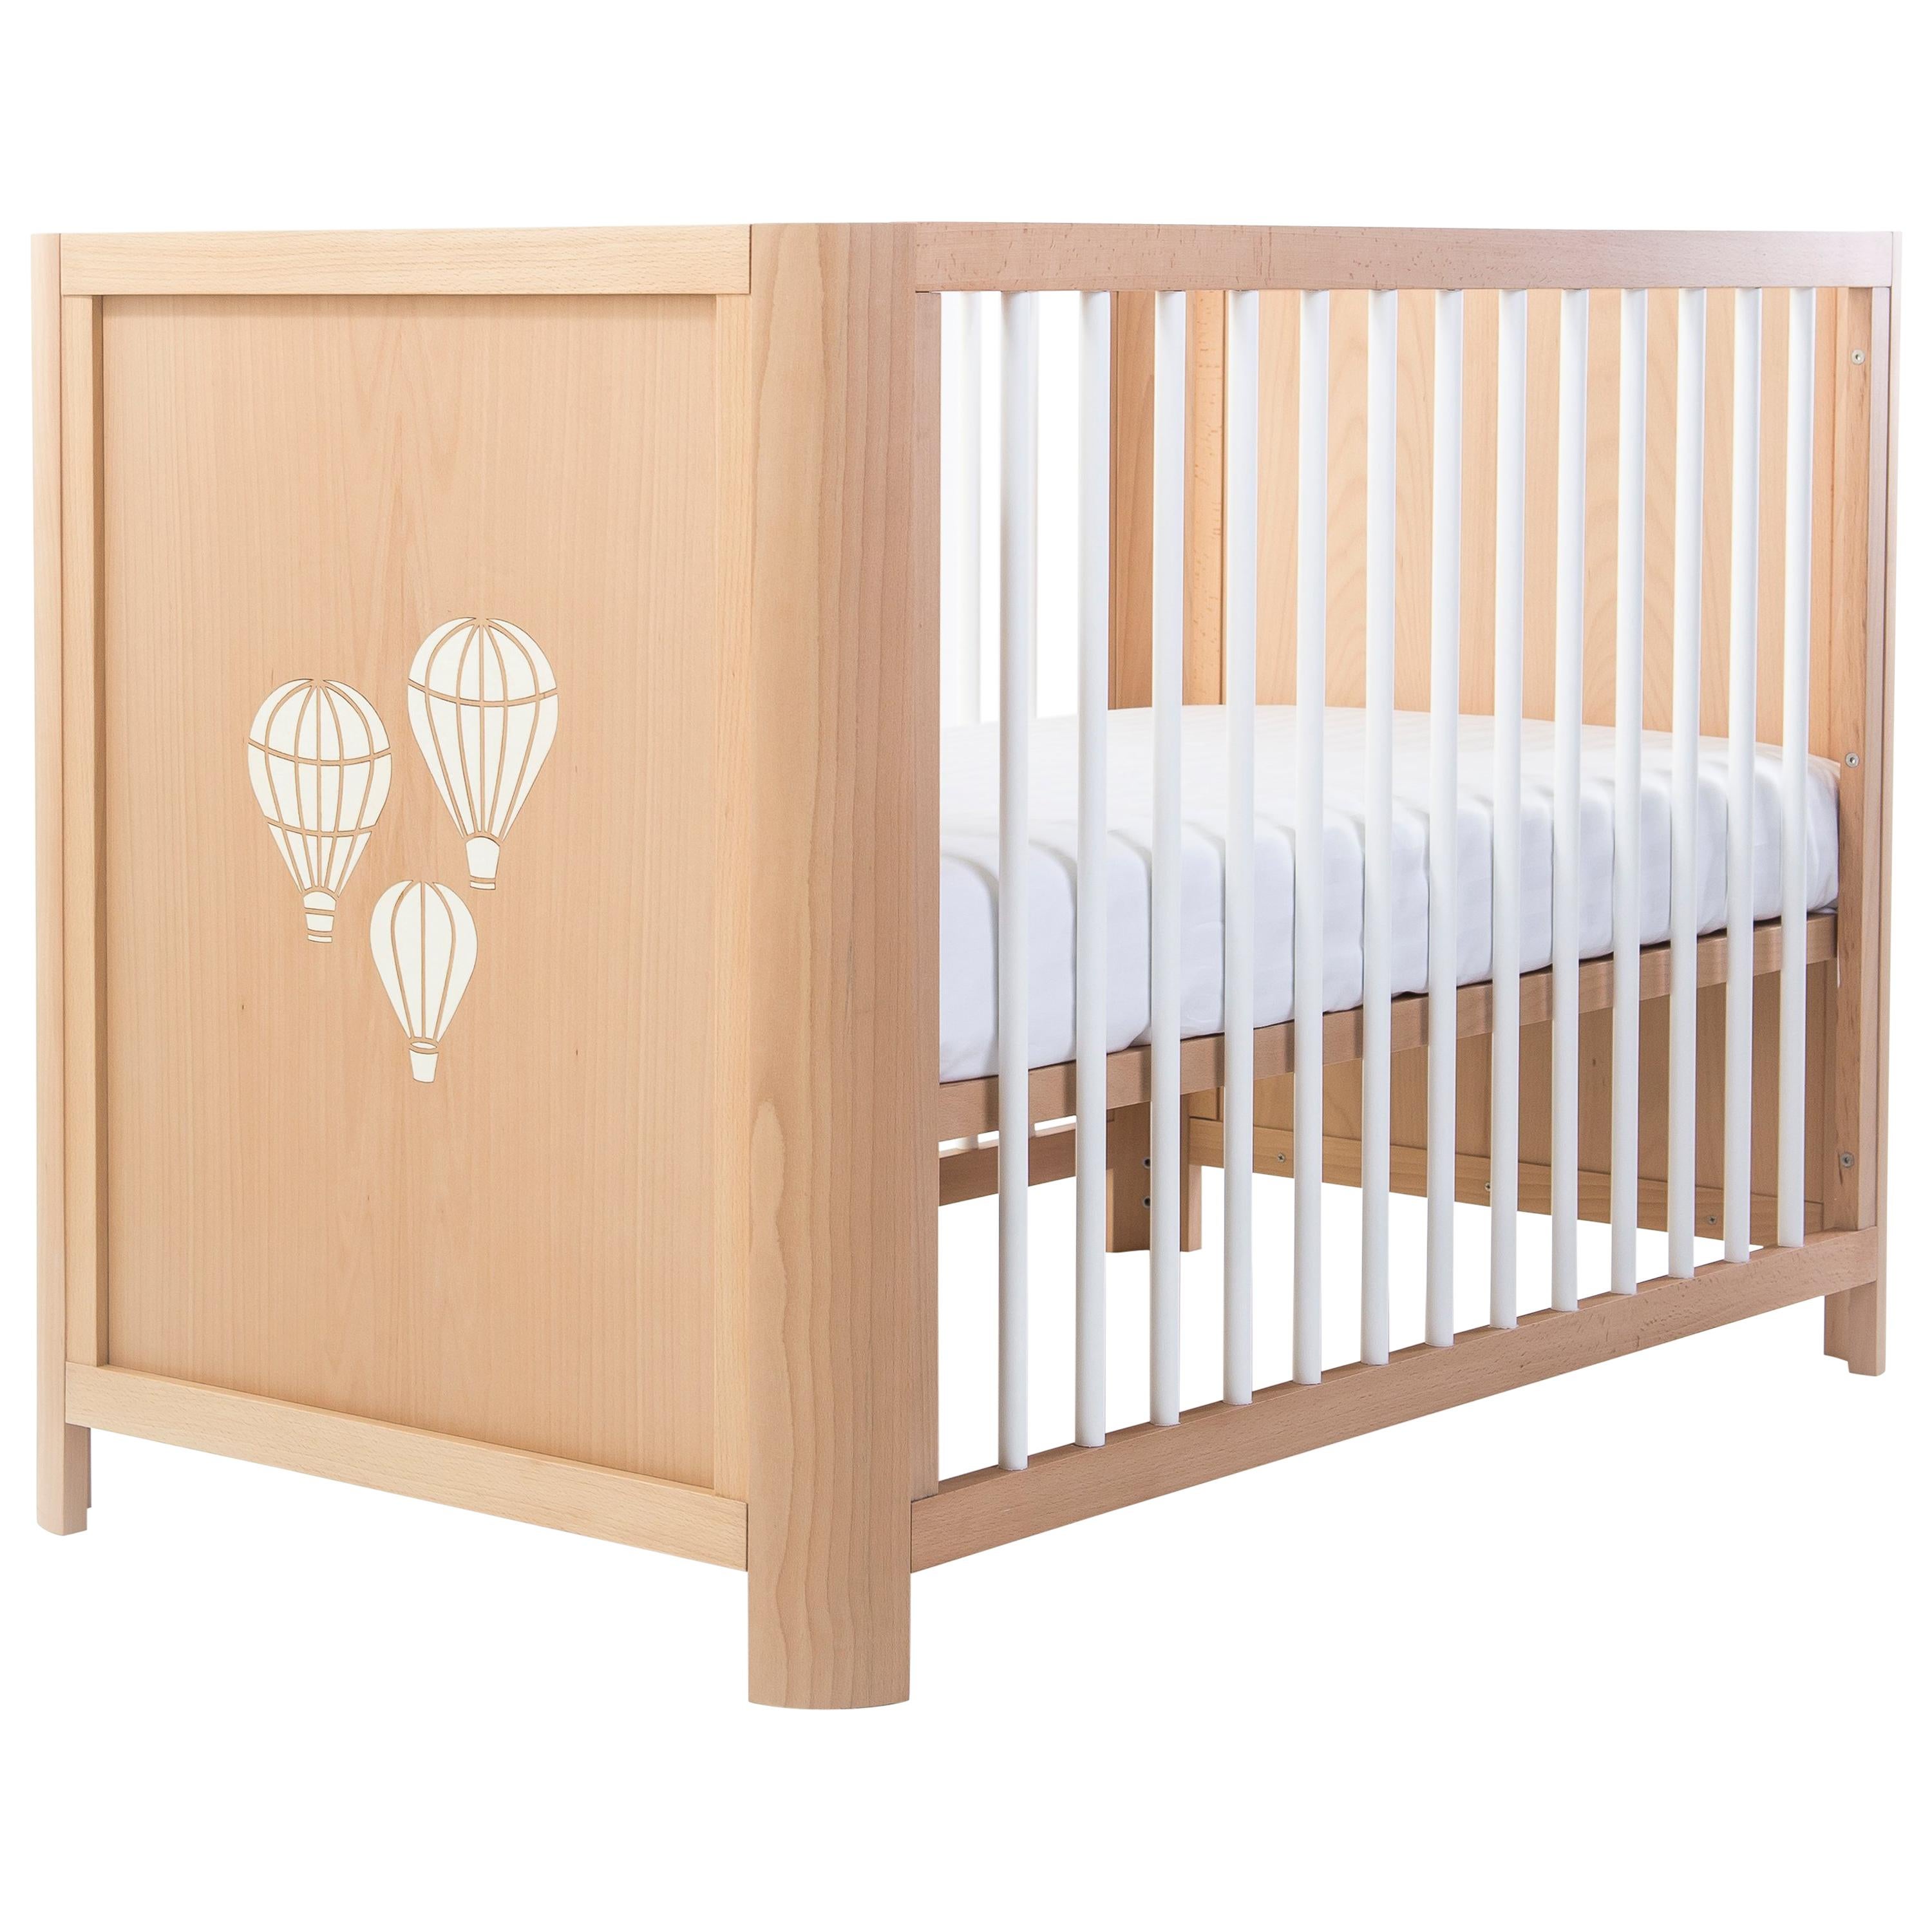 Handmade 5-in-1 Sense of Freedom Crib in Wood by MISK Nursery For Sale